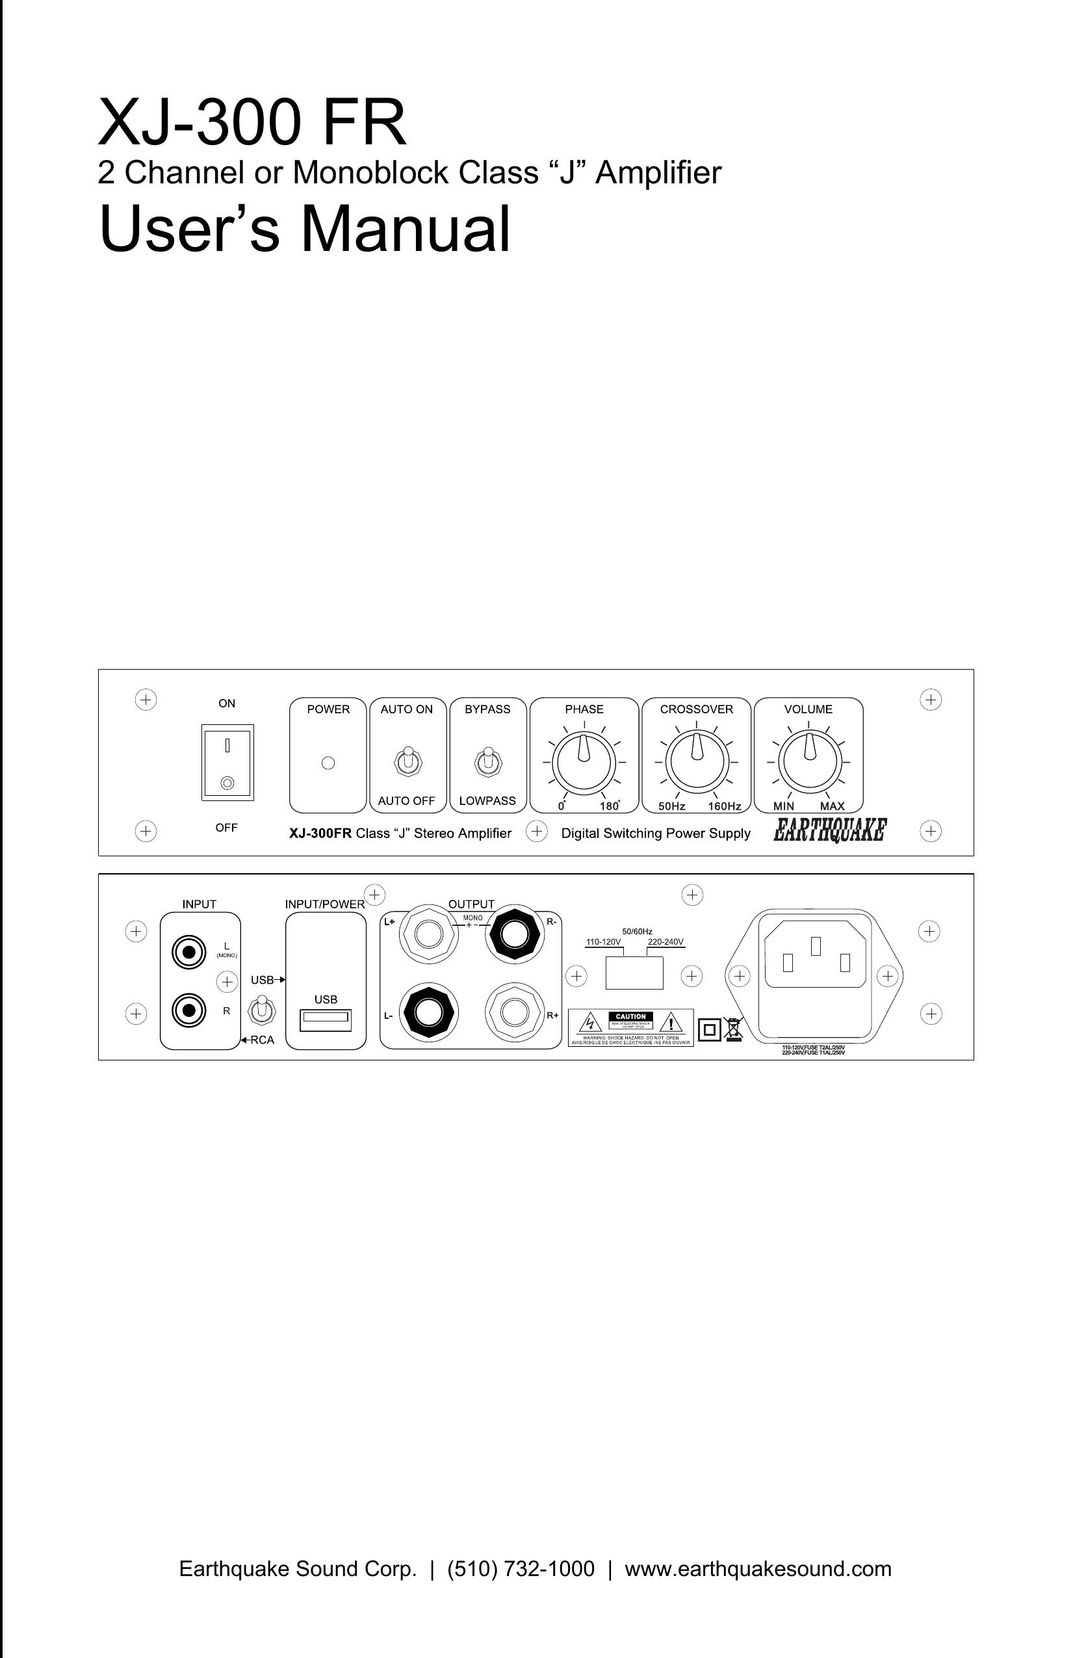 Earthquake Sound XJ-300 FR Stereo Amplifier User Manual